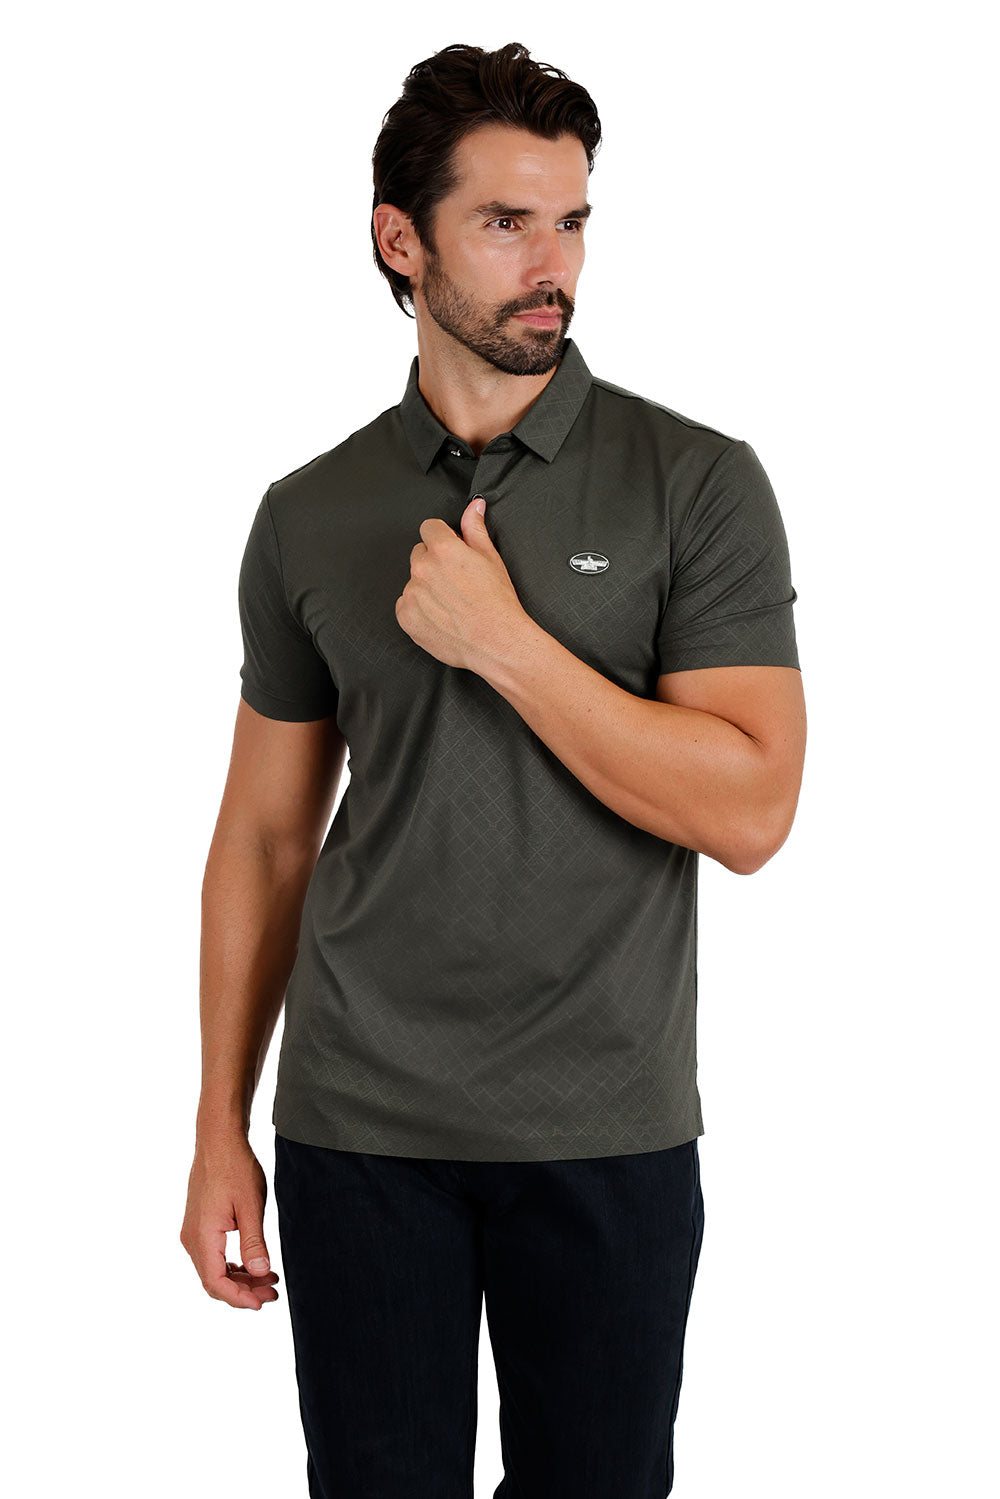 Barabas Men's Premium Solid Diamond Polo Short Sleeve Shirts 3P07 Olive